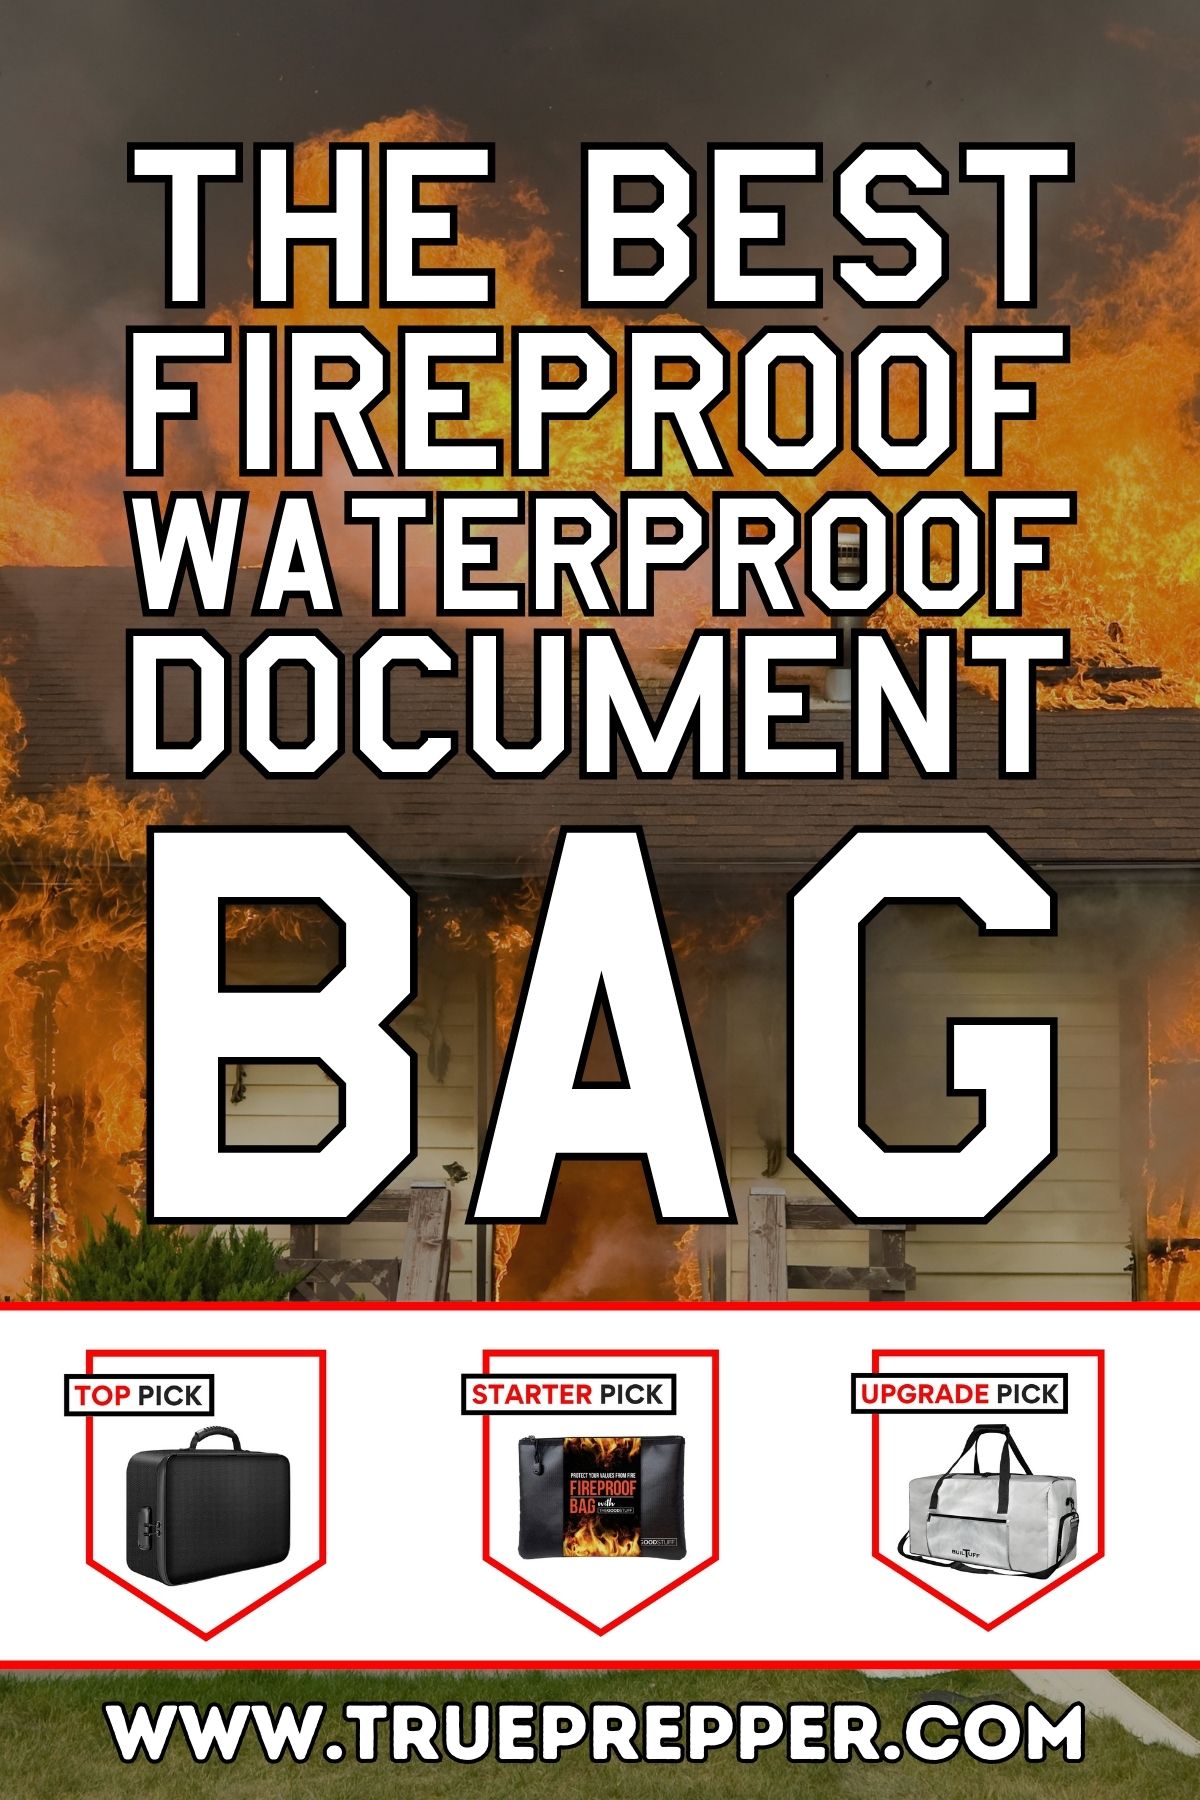 The Best Fireproof Waterproof Document Bag